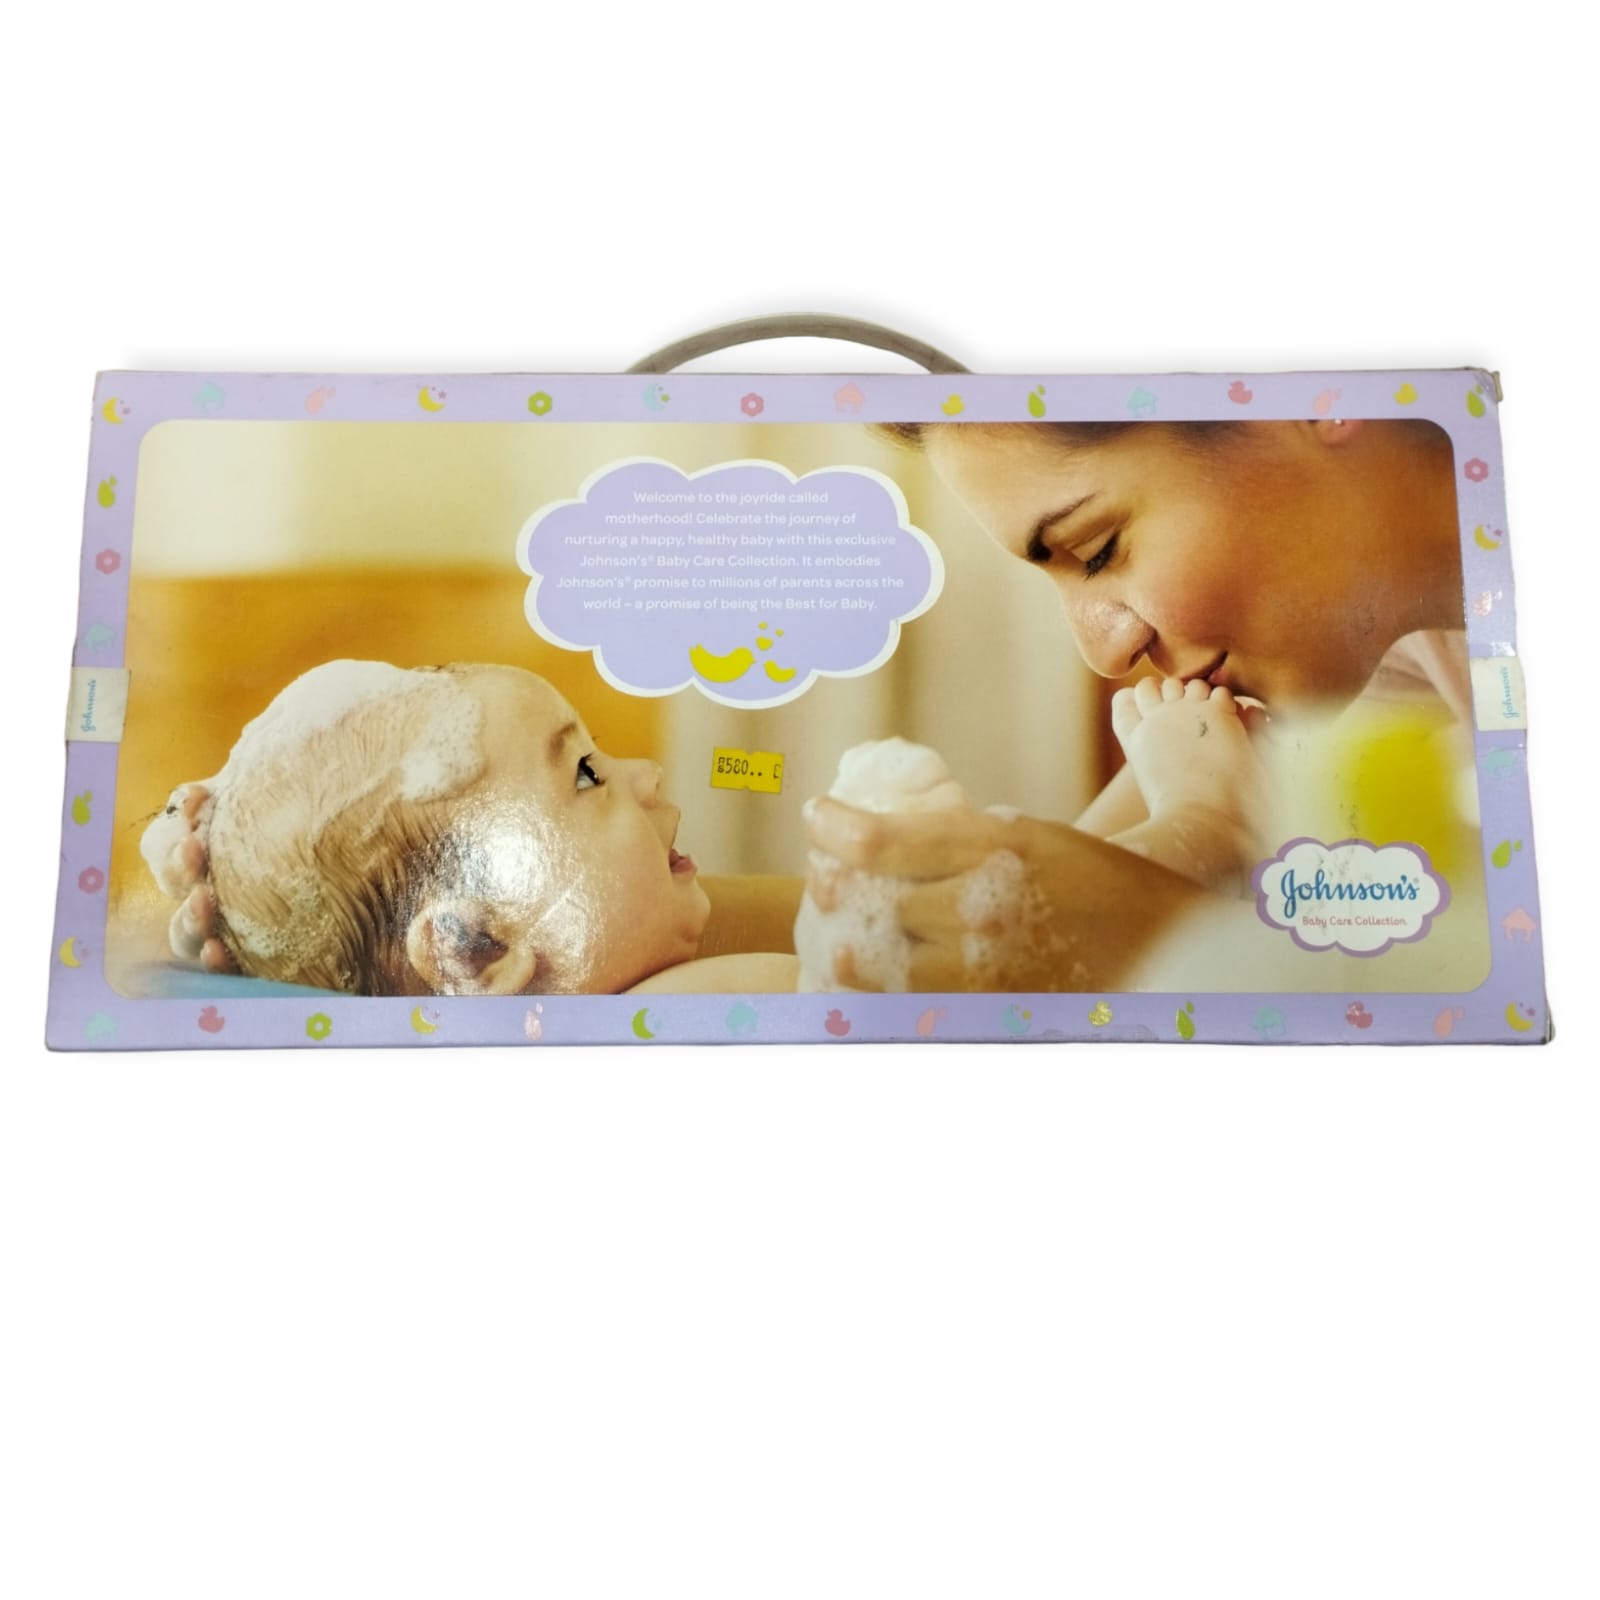 Johnson's & Johnson's Baby Gift Set - baby & kid stuff - by owner -  household sale - craigslist